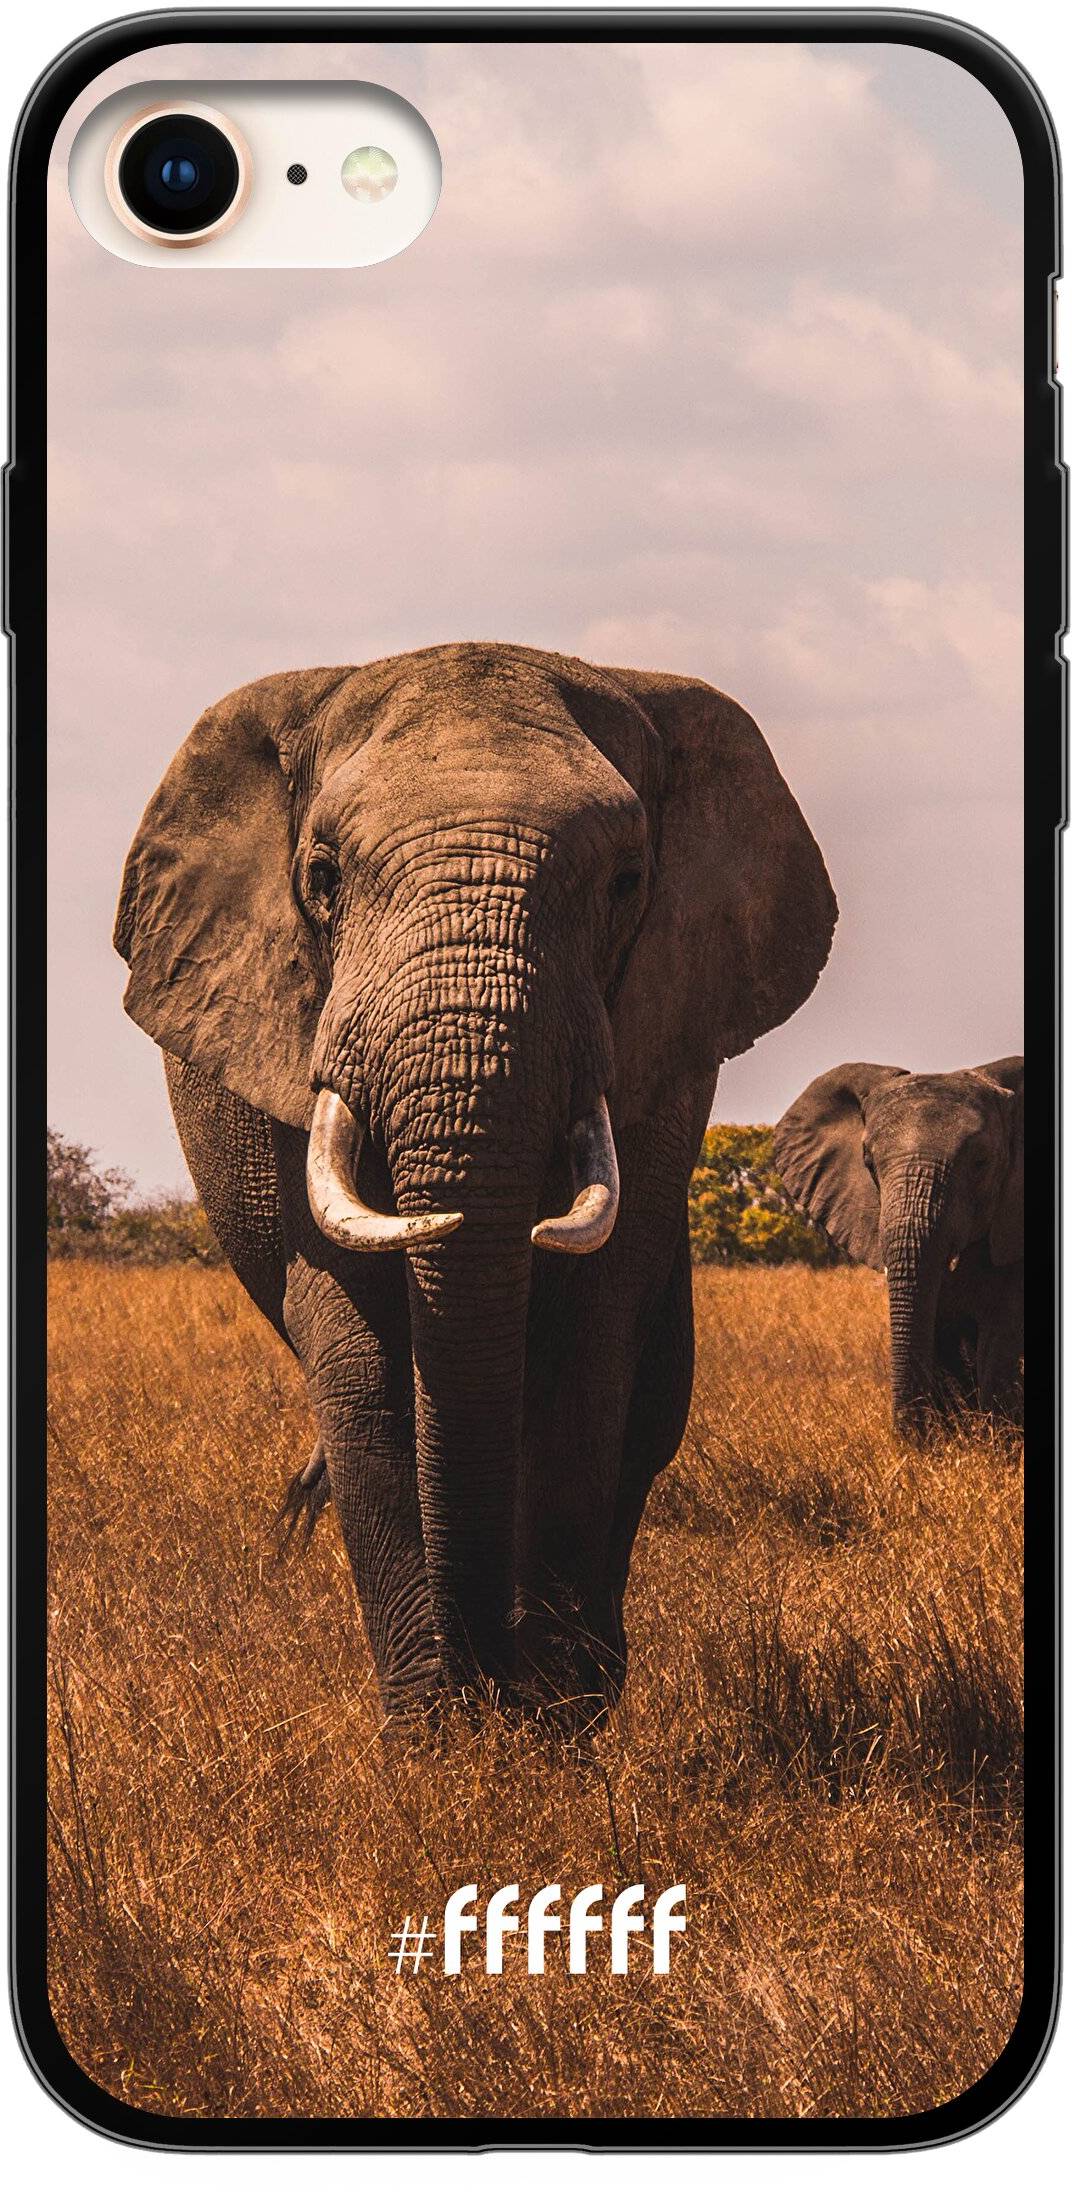 Elephants iPhone 7